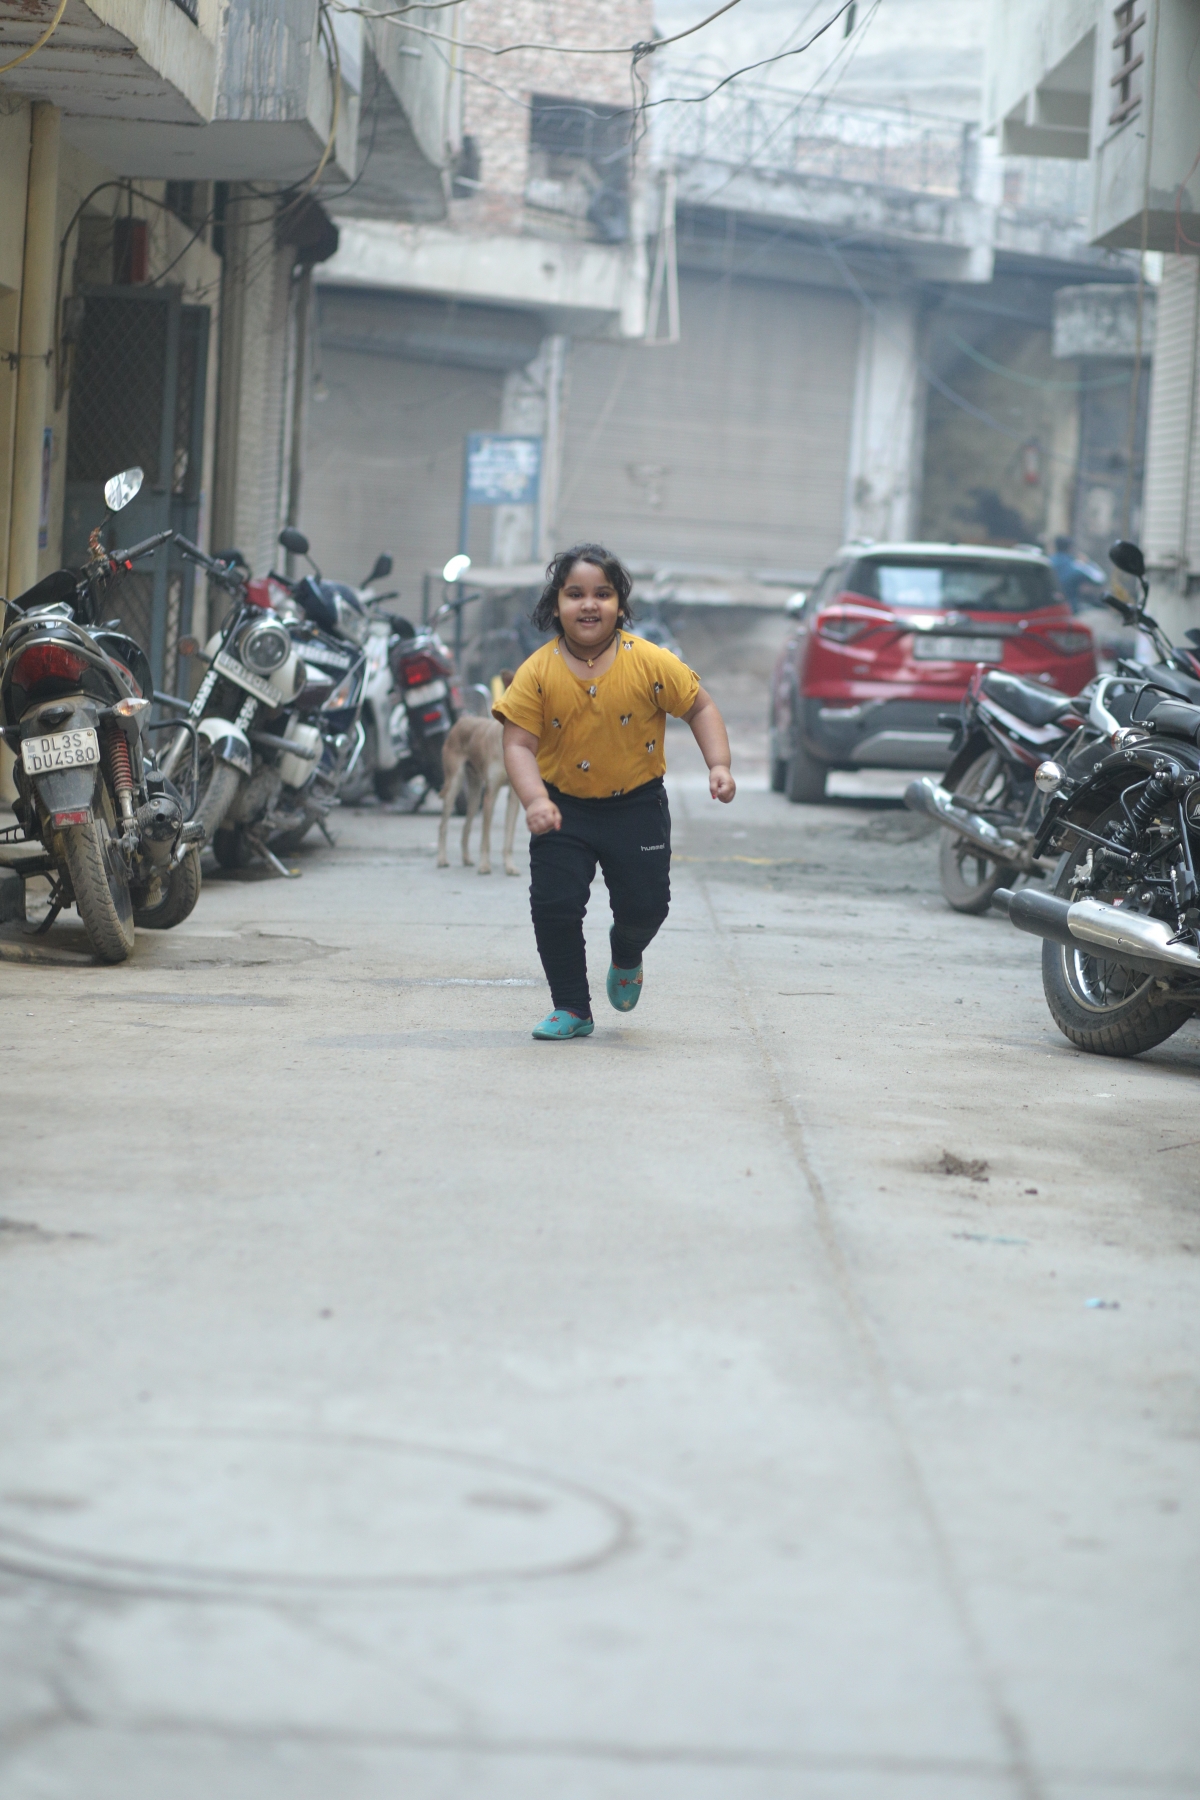 Child running in the street